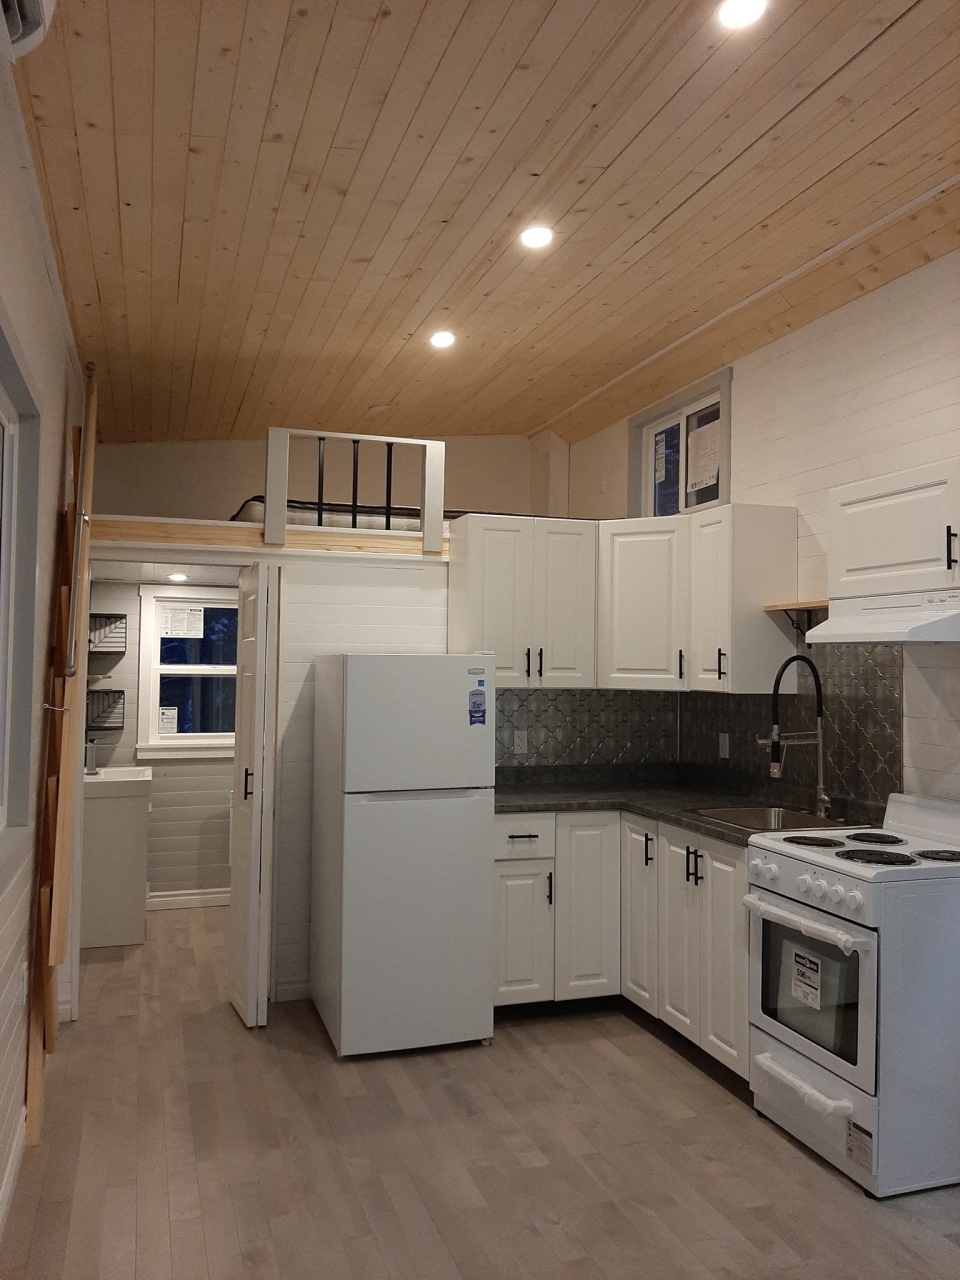 Piligan Construction tiny home kitchen